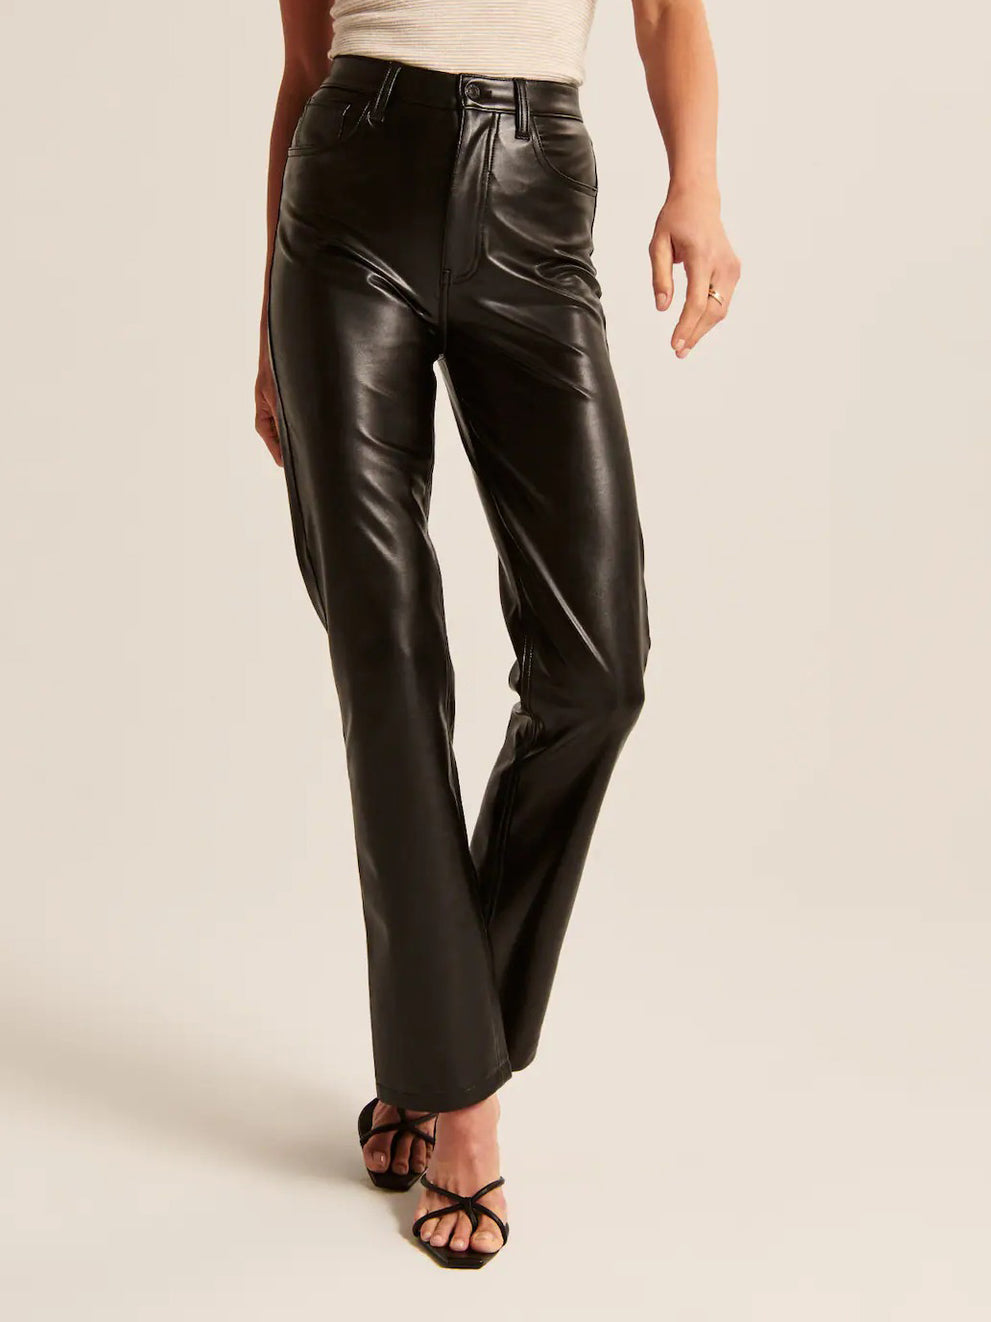 Vegan Leather Pants - The Boutique at Seneca